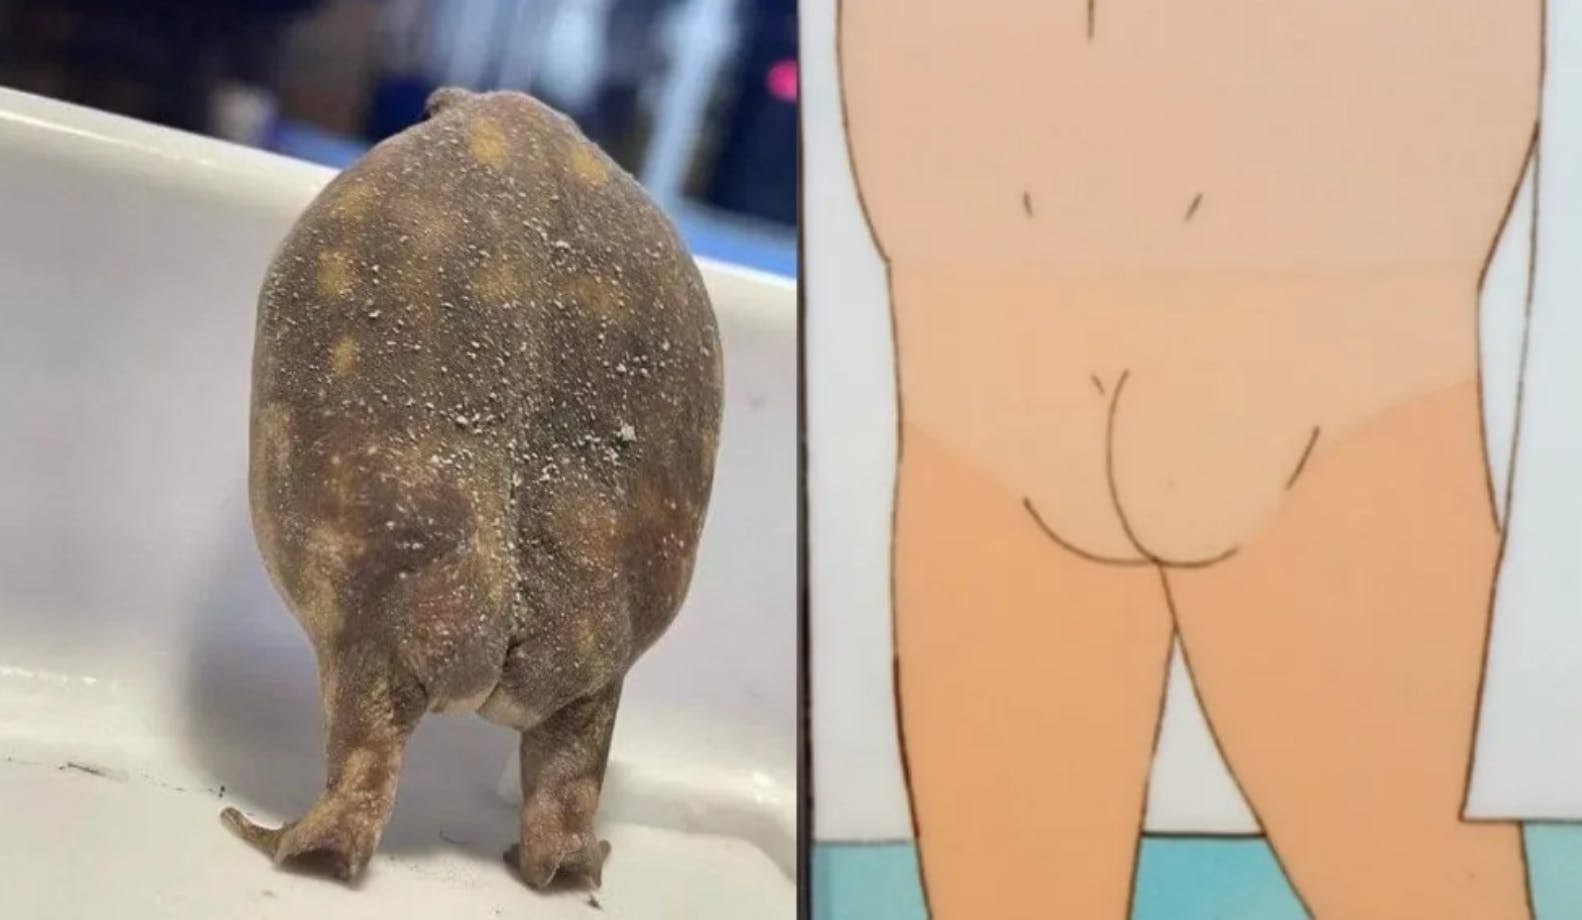 Frog Butt meme side-by-side with Hank Hill's butt.